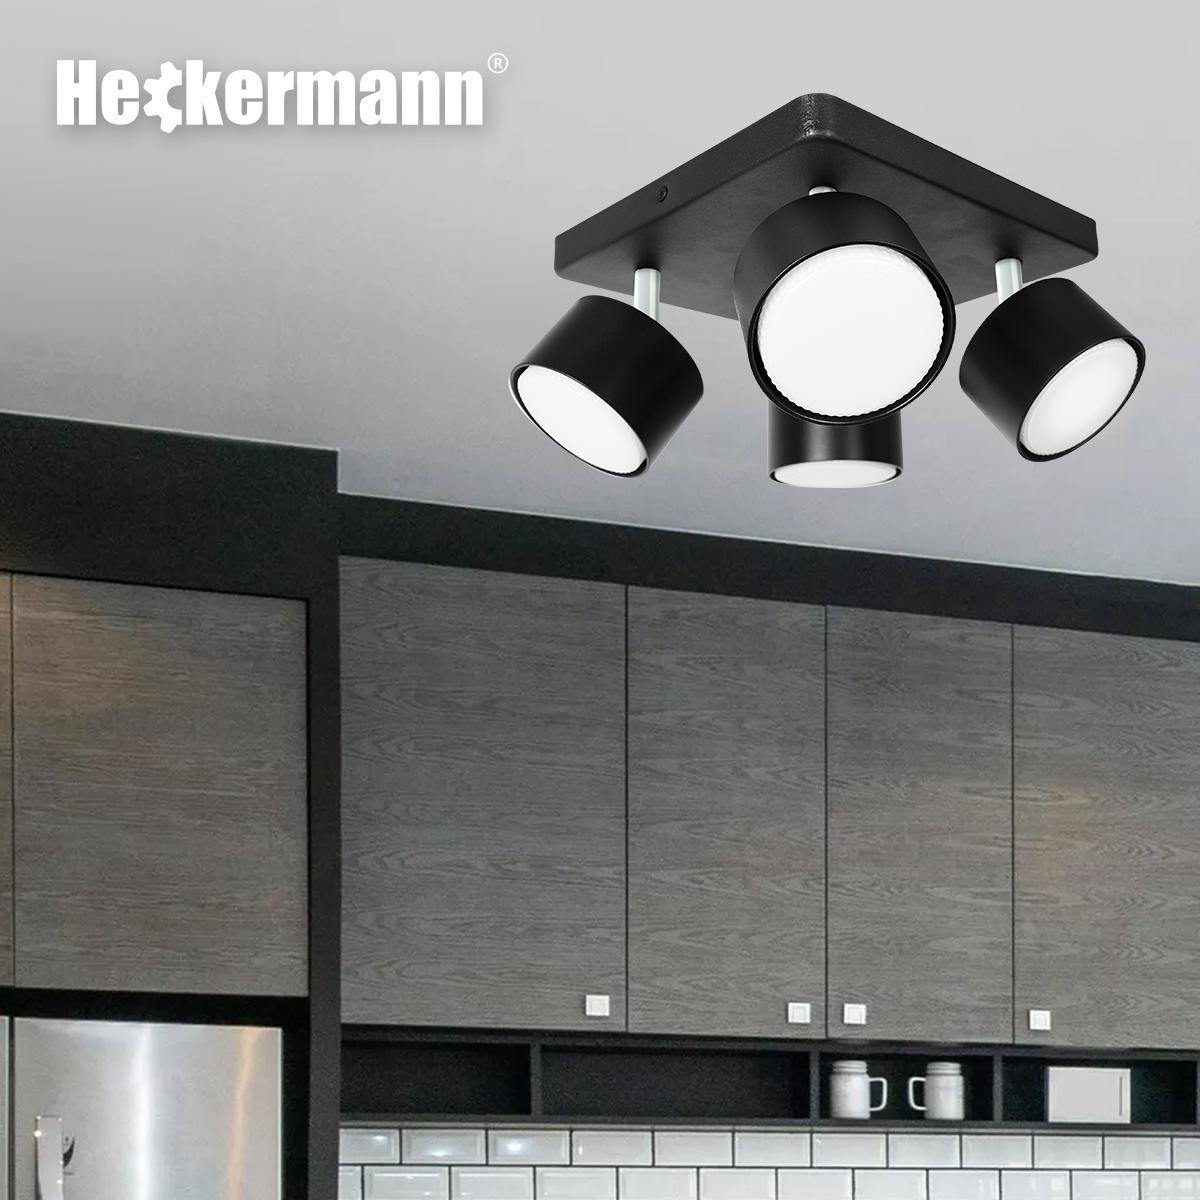 Lampa sufitowa punktowa LED Heckermann 8795318A Czarna 4x głowica 4 Full Screen